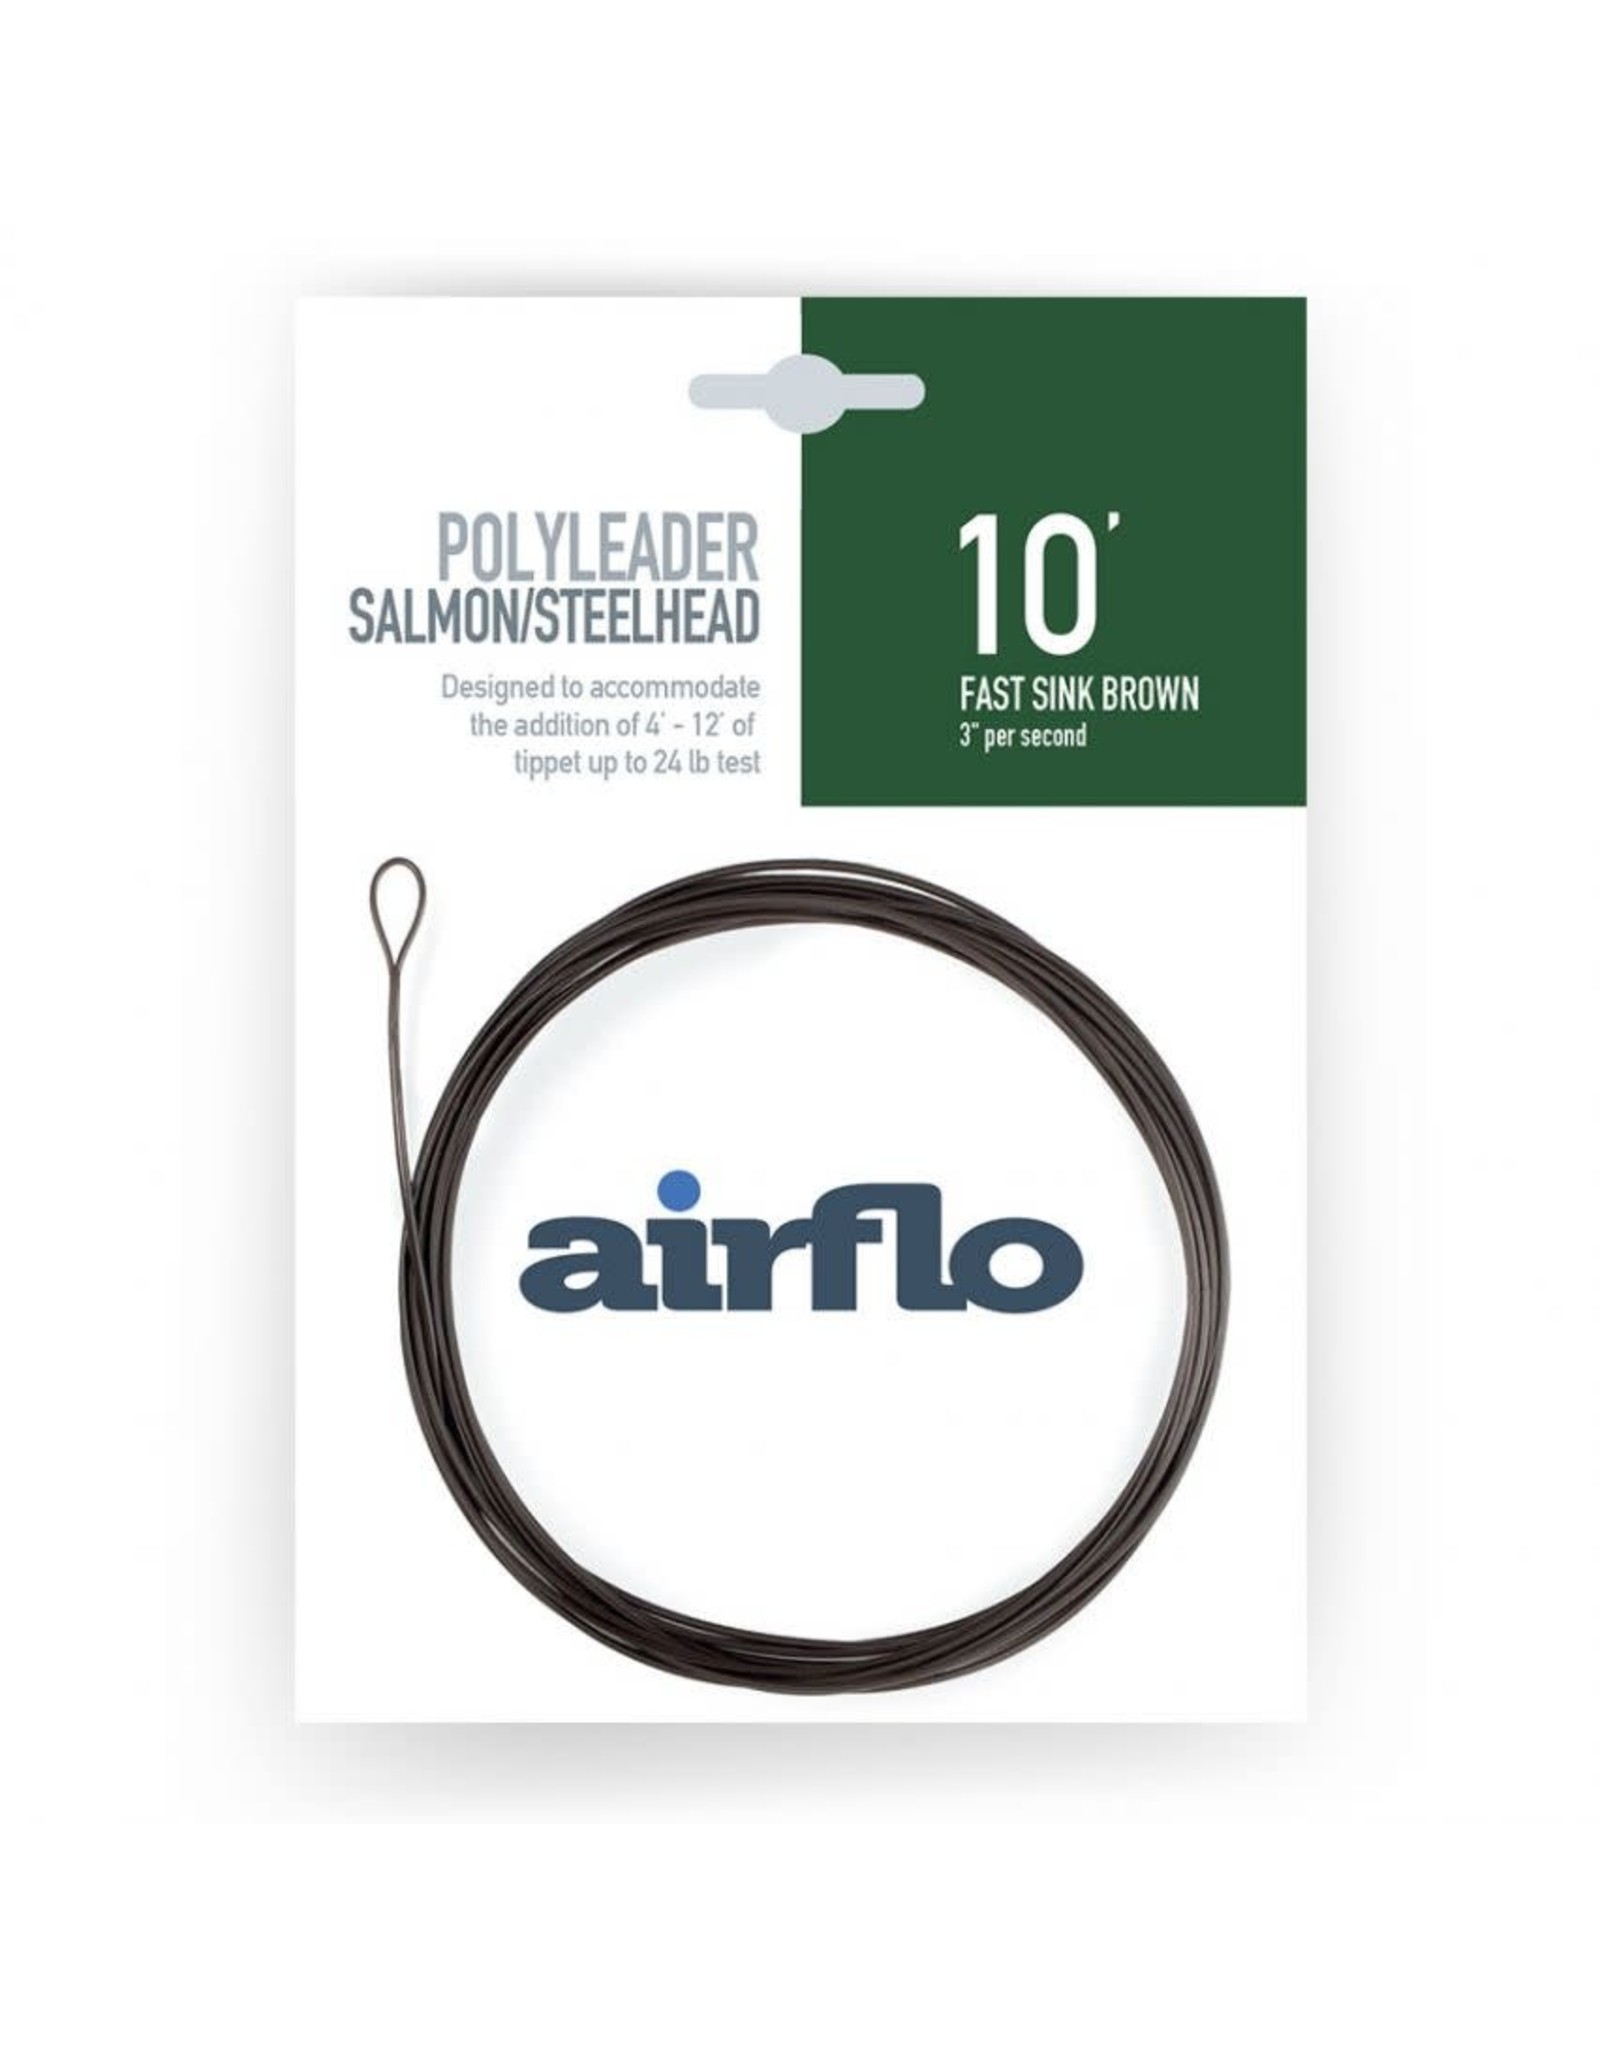 Airflo Airflo Salmon/Steelhead Poly Leader 10' Fast Sink Brown 3ips